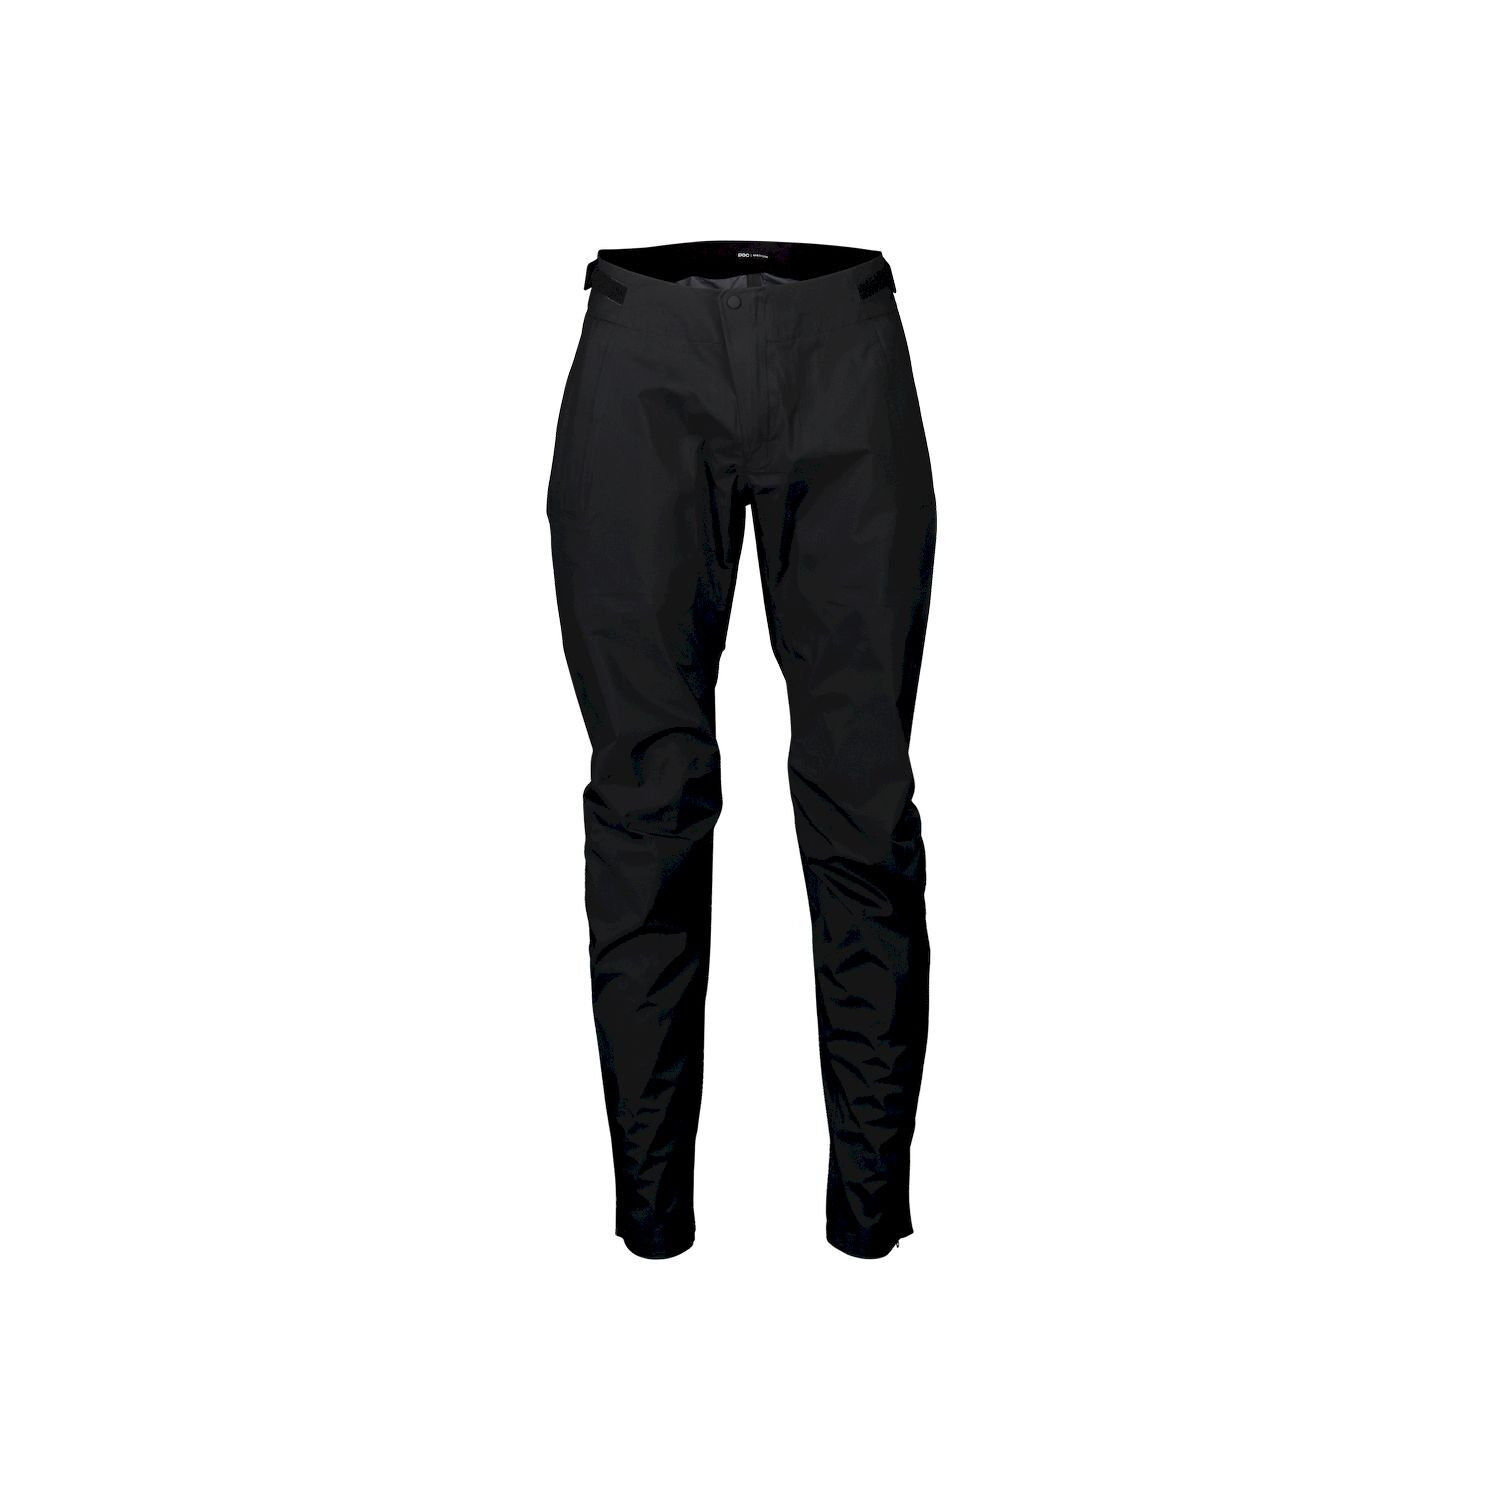 Poc Motion Rain Pants - Pantalones impermeables para ciclismo